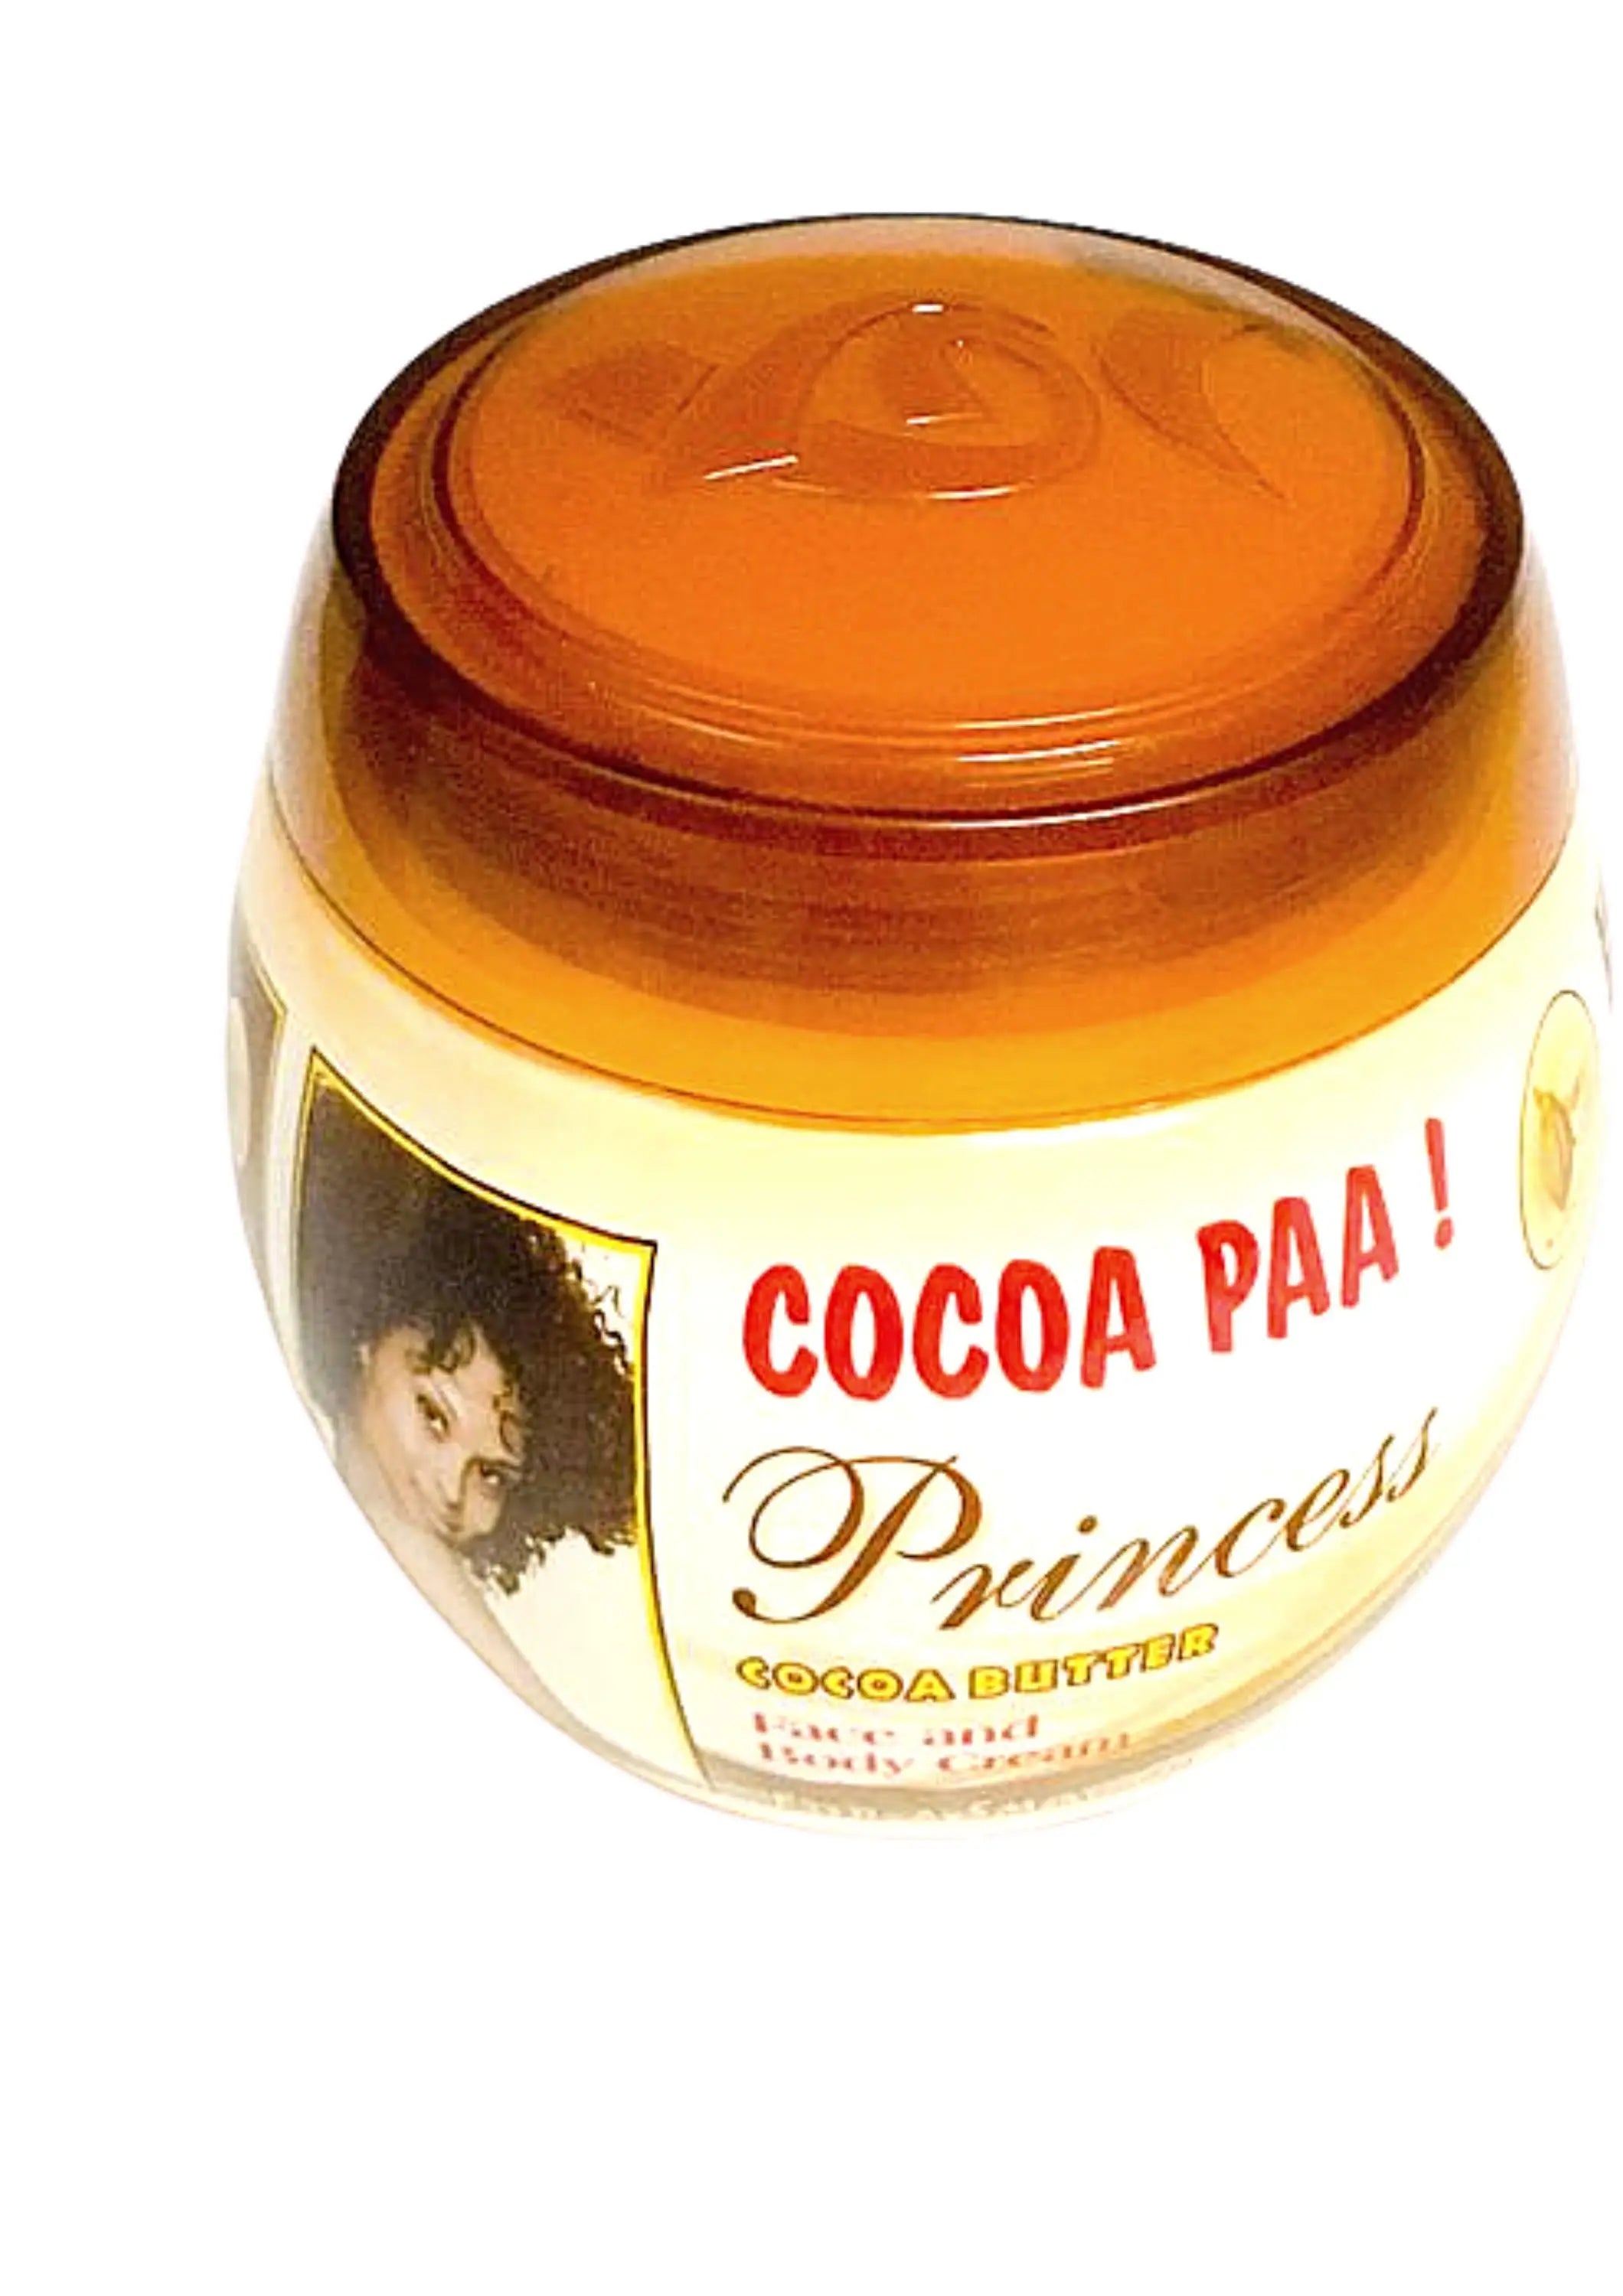 Princess Cocoa Paa Cocoa butter Hand and Body Cream 460ml by Princess Cocoa Paa